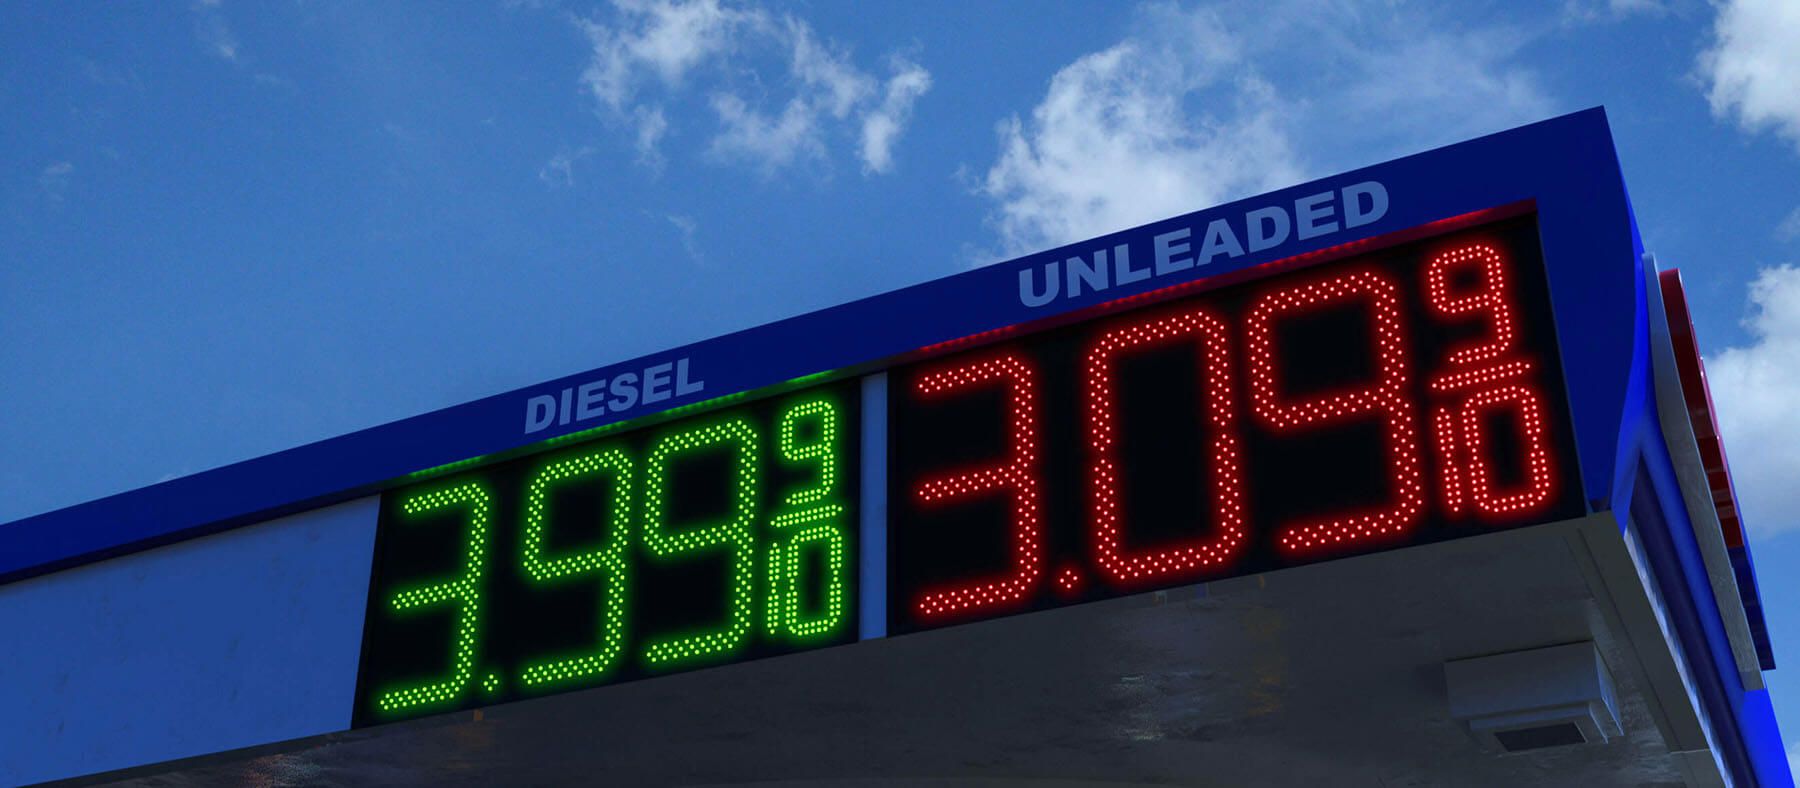 Gas Price Signs by Numeritex Displays